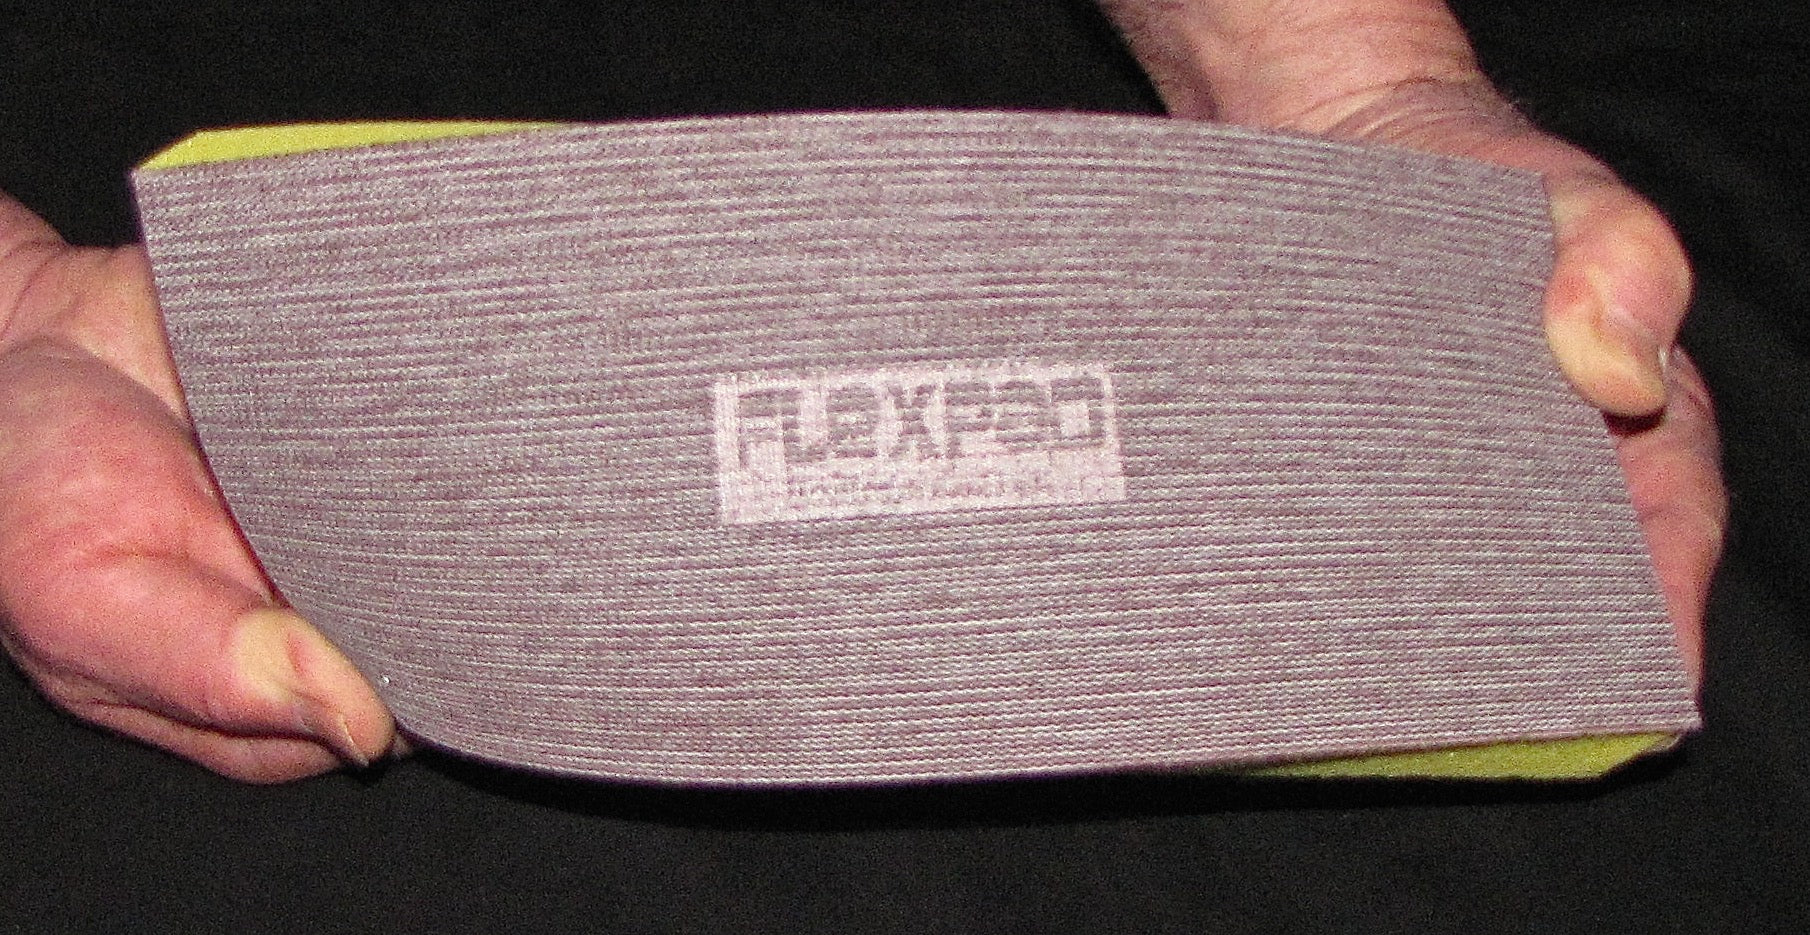 Flexpad Yellow Soft Flex Shaping/Sanding Block